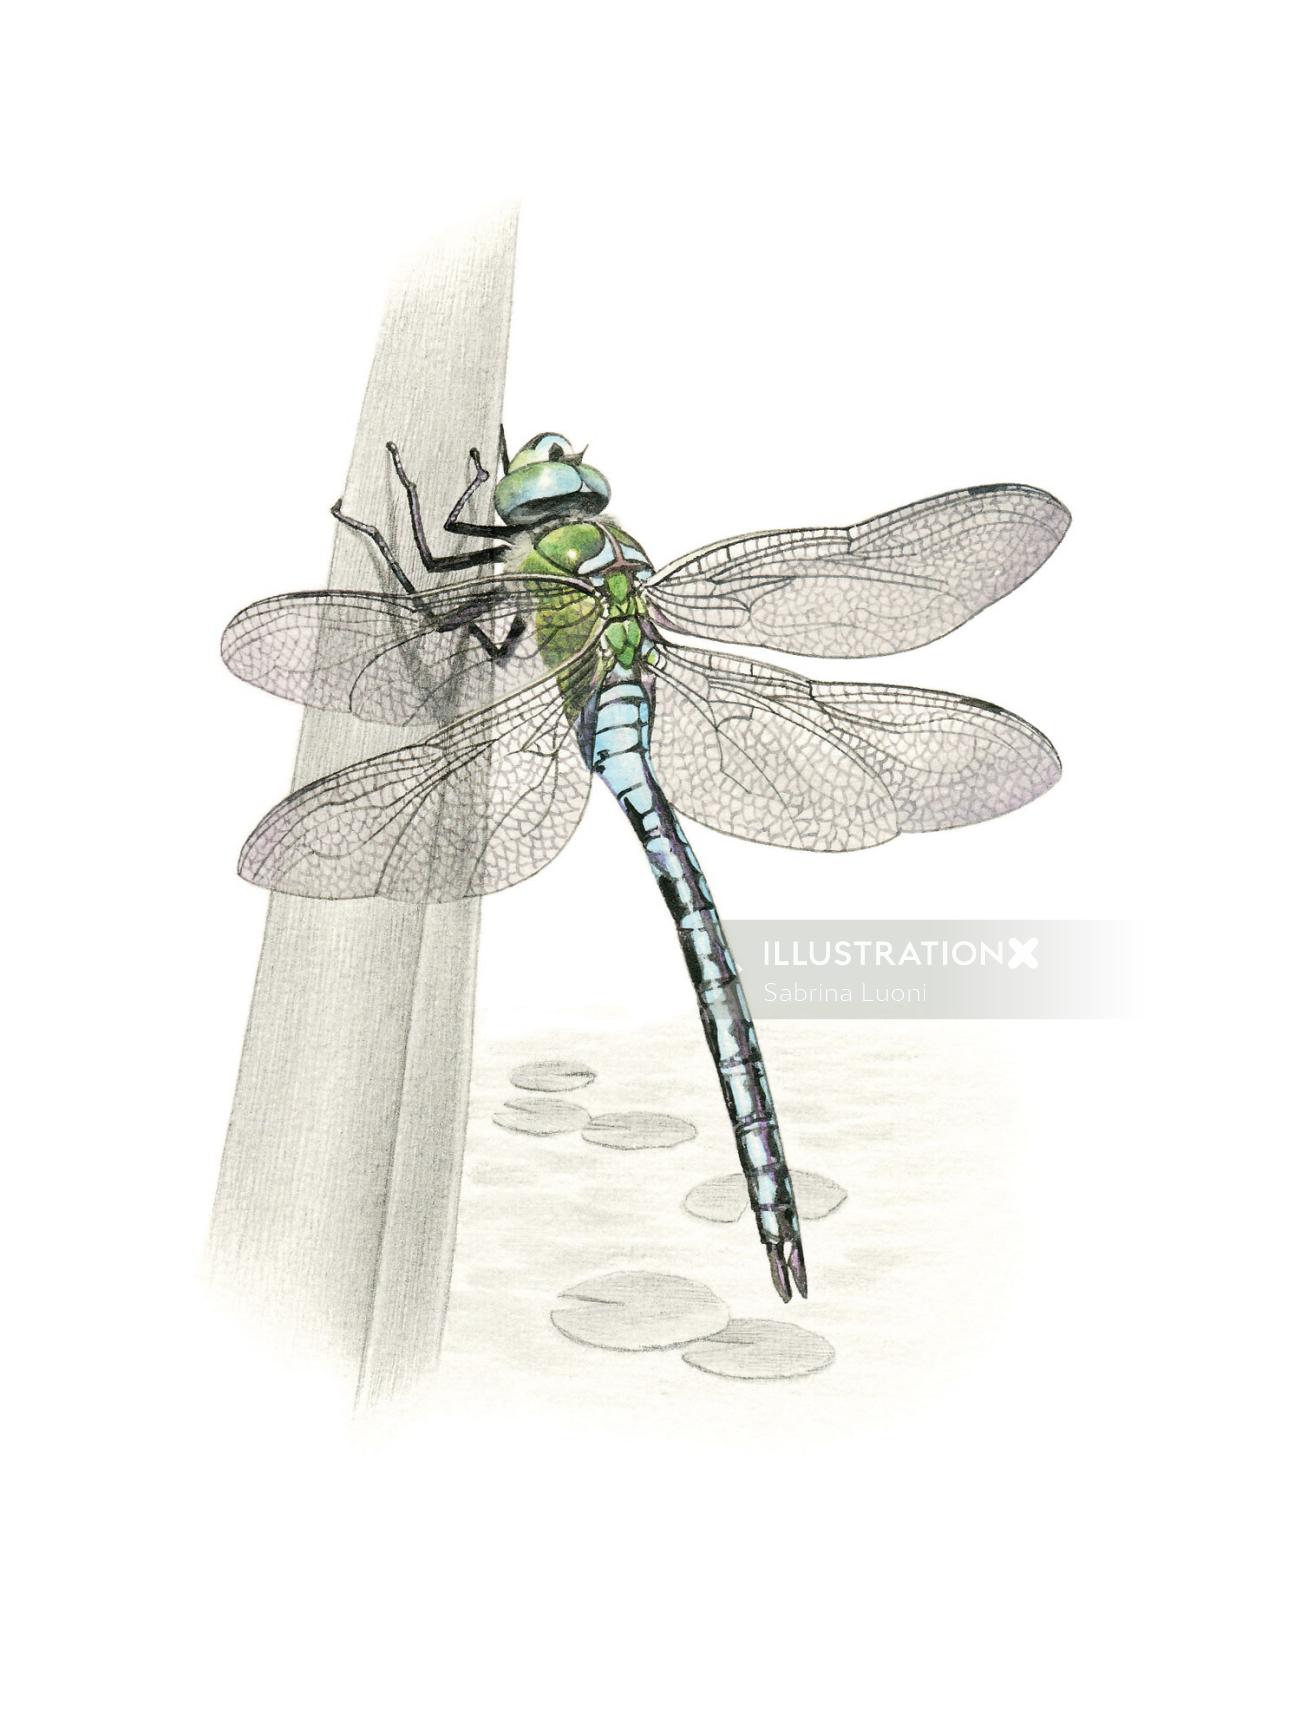 Pencil made art of Emperor Dragonfly